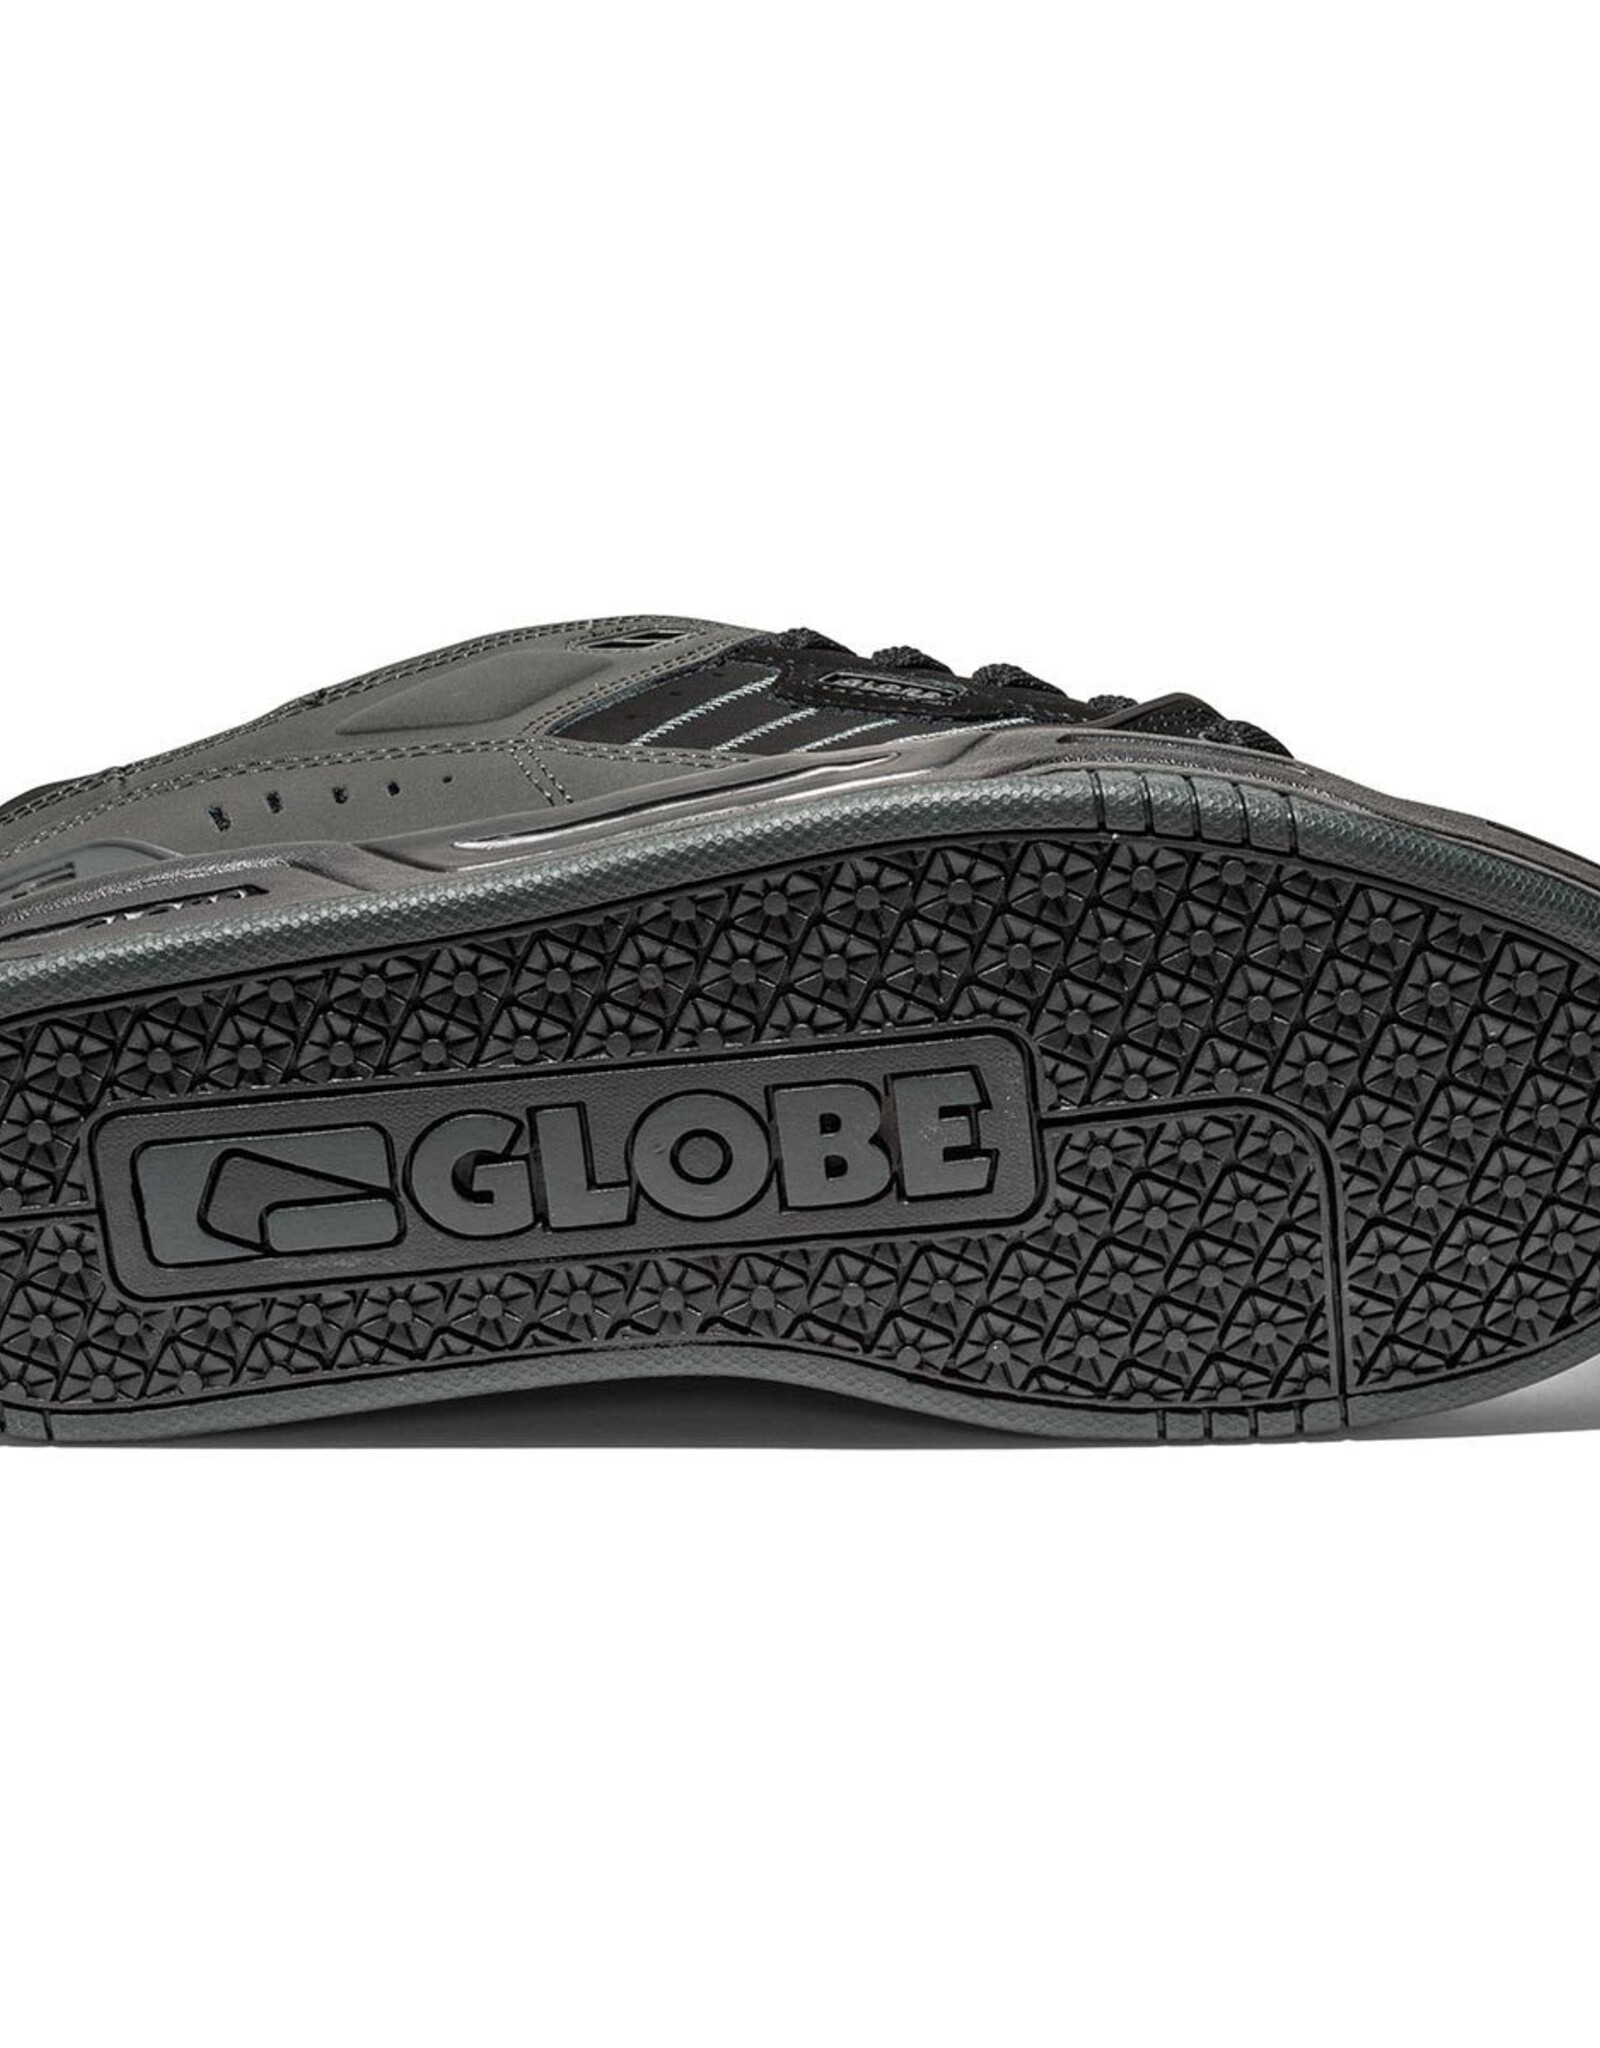 Globe Unisex's Skateboard Trainers, Black/Gunmetal, 9.5 